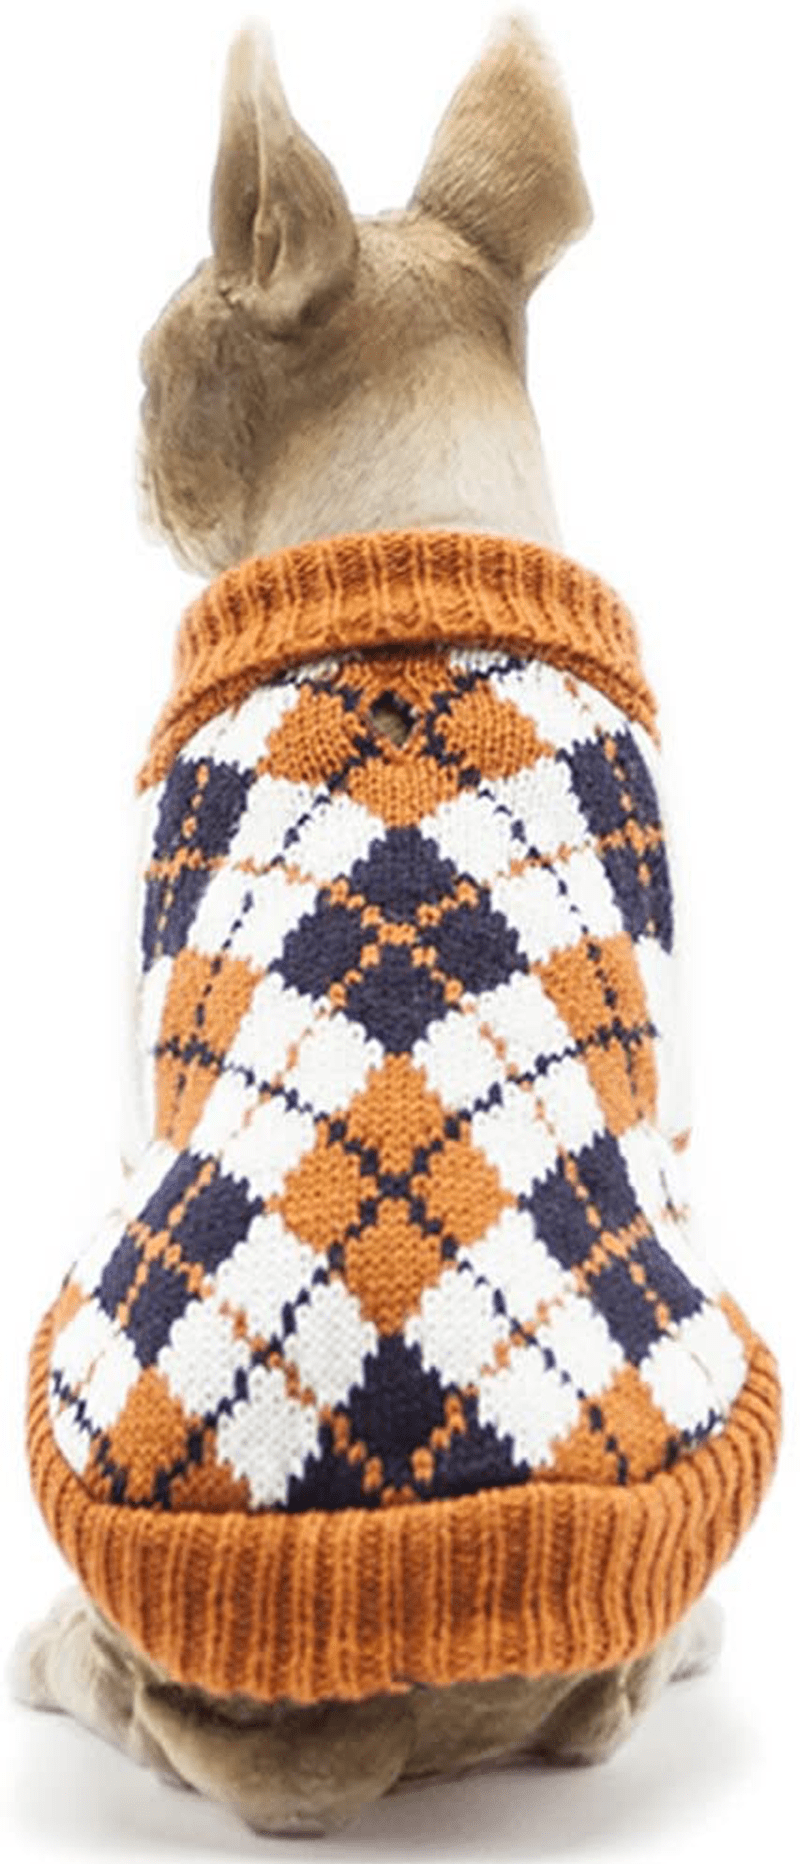 BOBIBI Dog Sweater of the Diamond Plaid Pet Cat Winter Knitwear Warm Clothes,Orange,Small